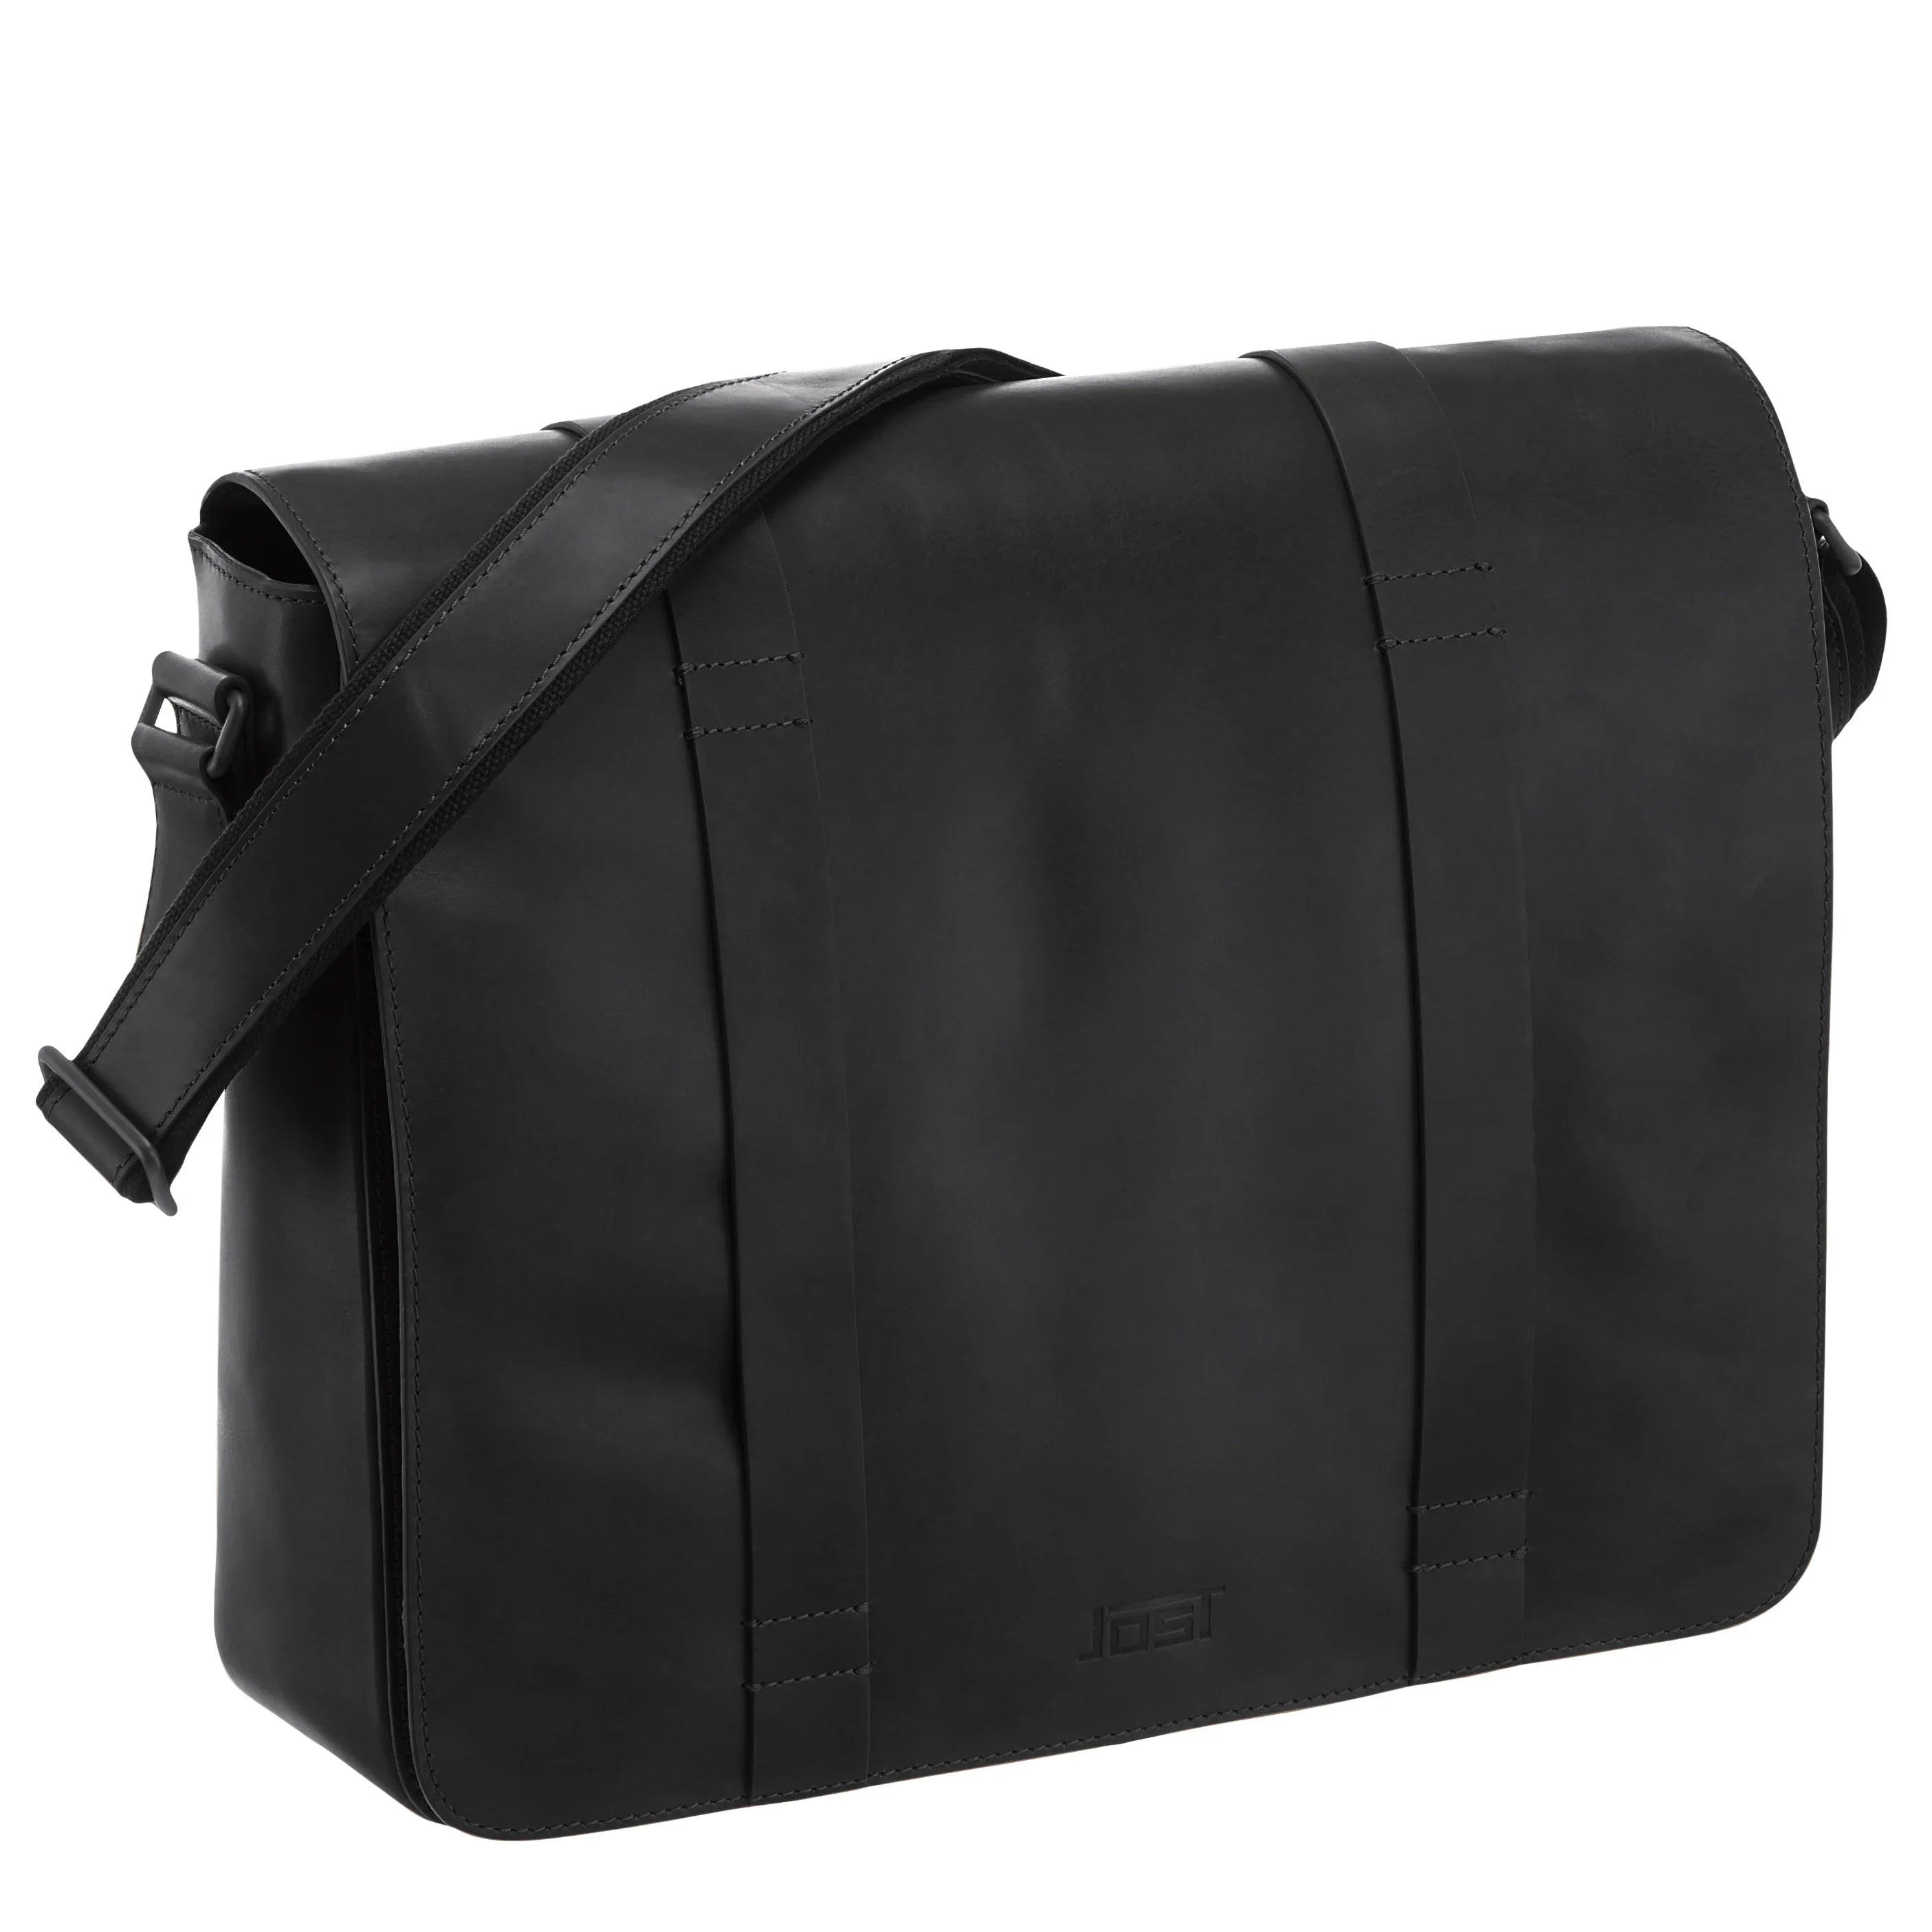 Jost Aarhus shoulder bag 38 cm - black